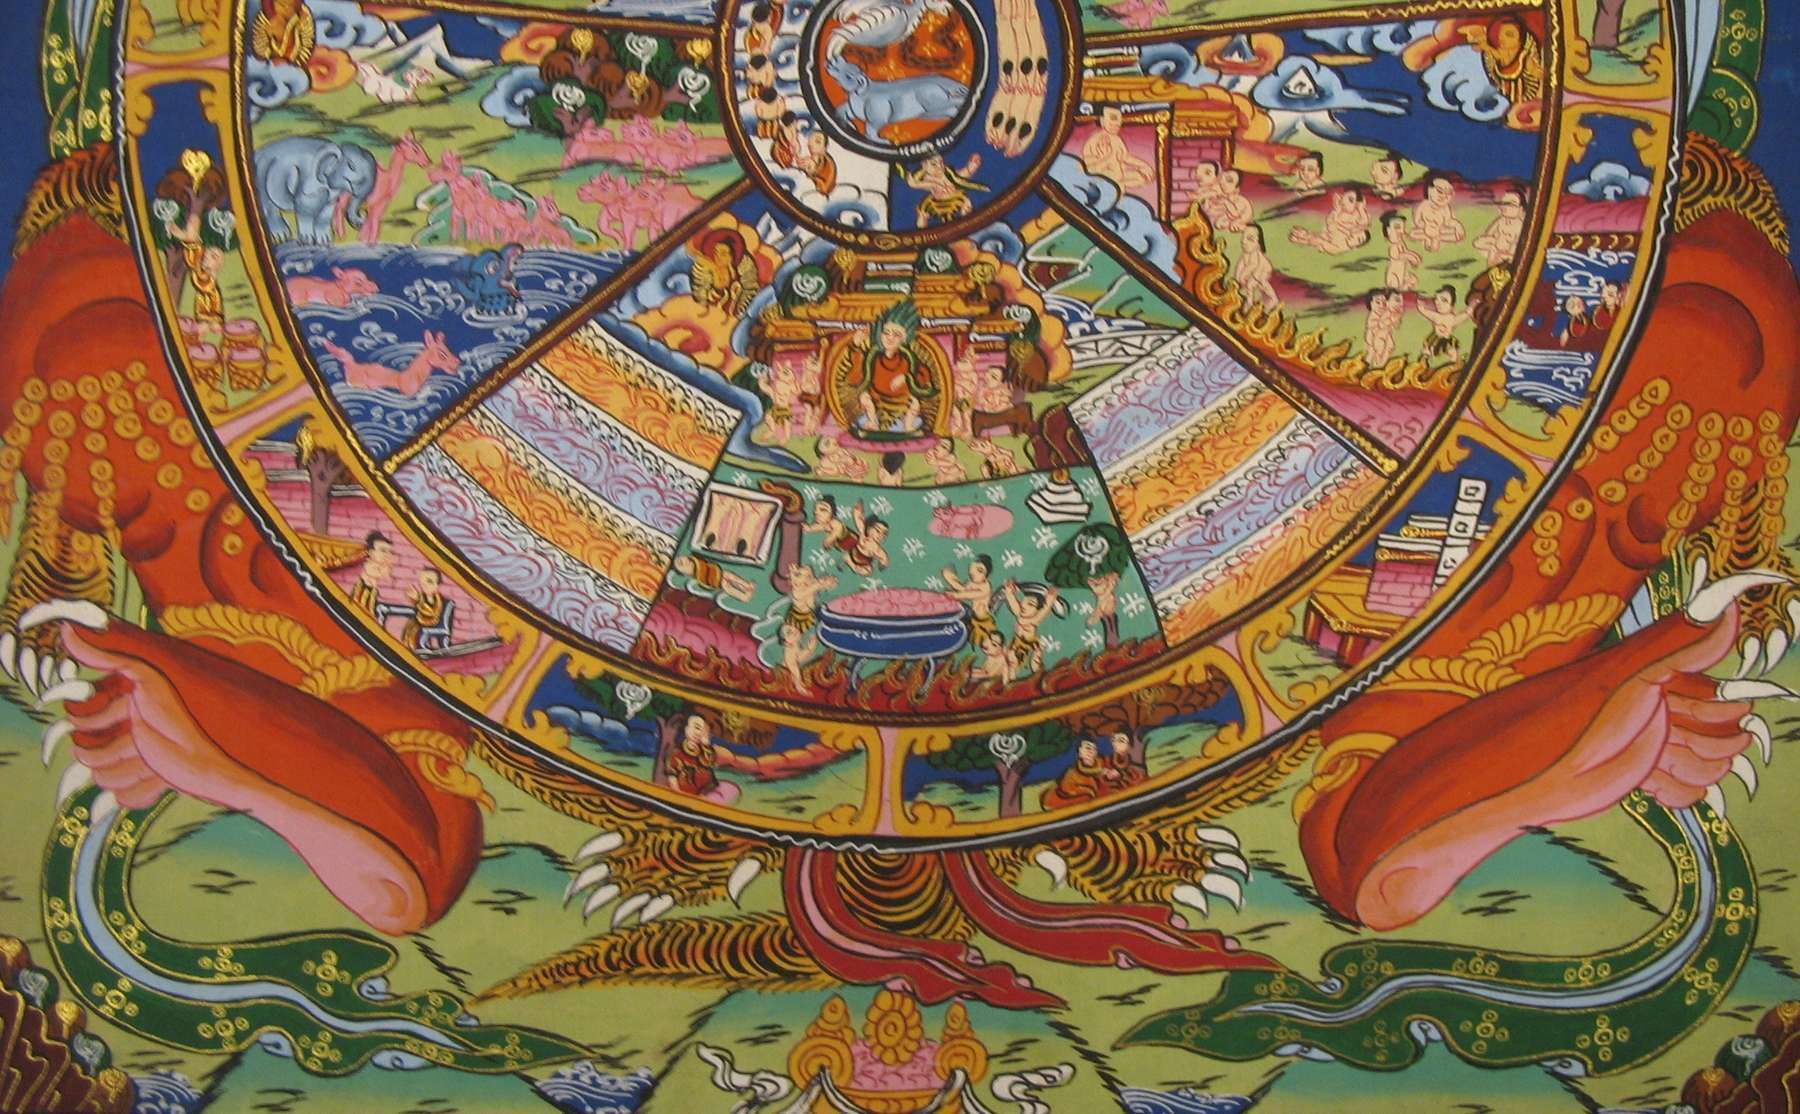 wheel of life tibetan print